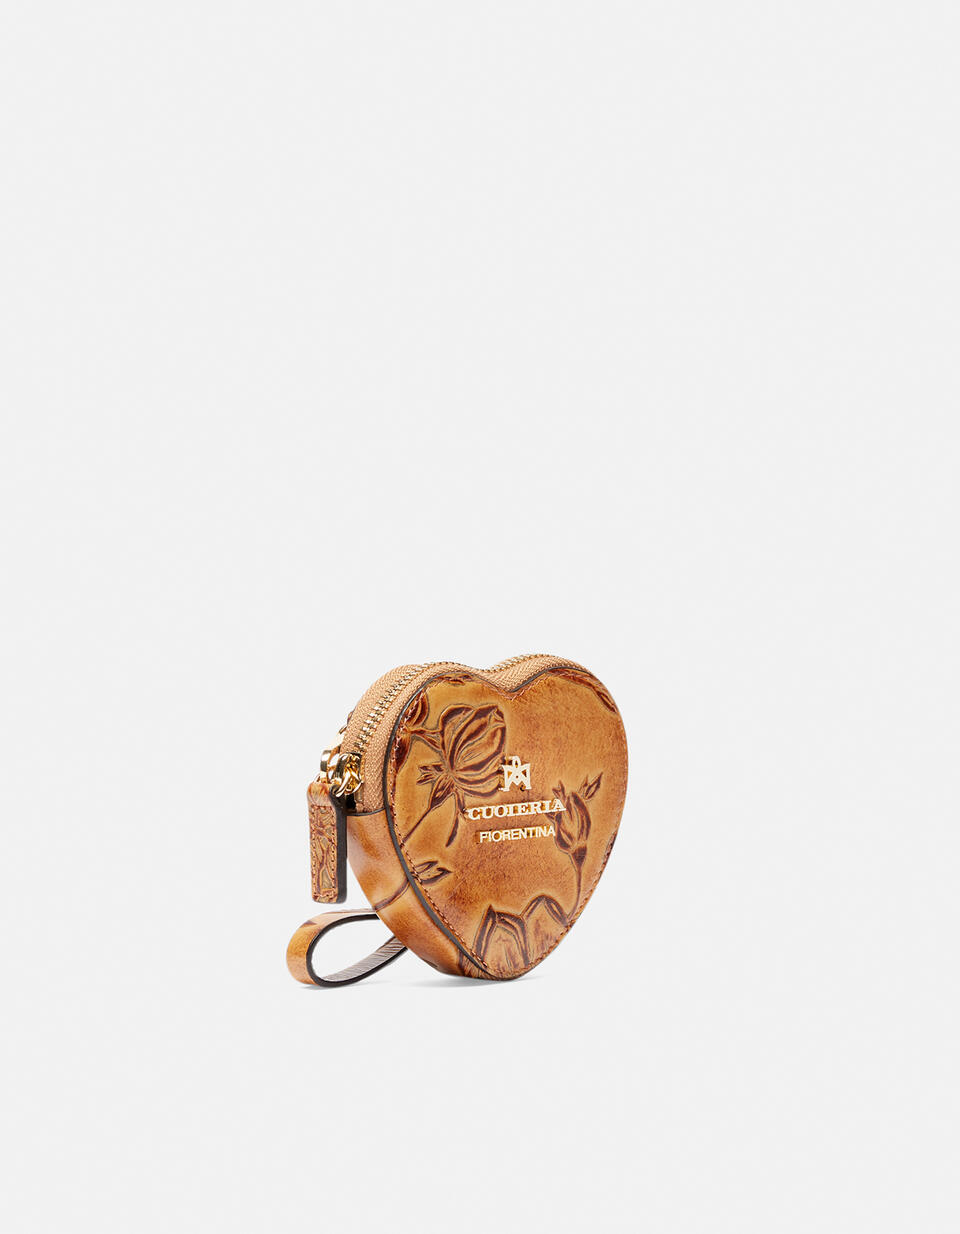 Heart purse - Women's Accessories | Accessories Mimì BEIGE - Women's Accessories | AccessoriesCuoieria Fiorentina